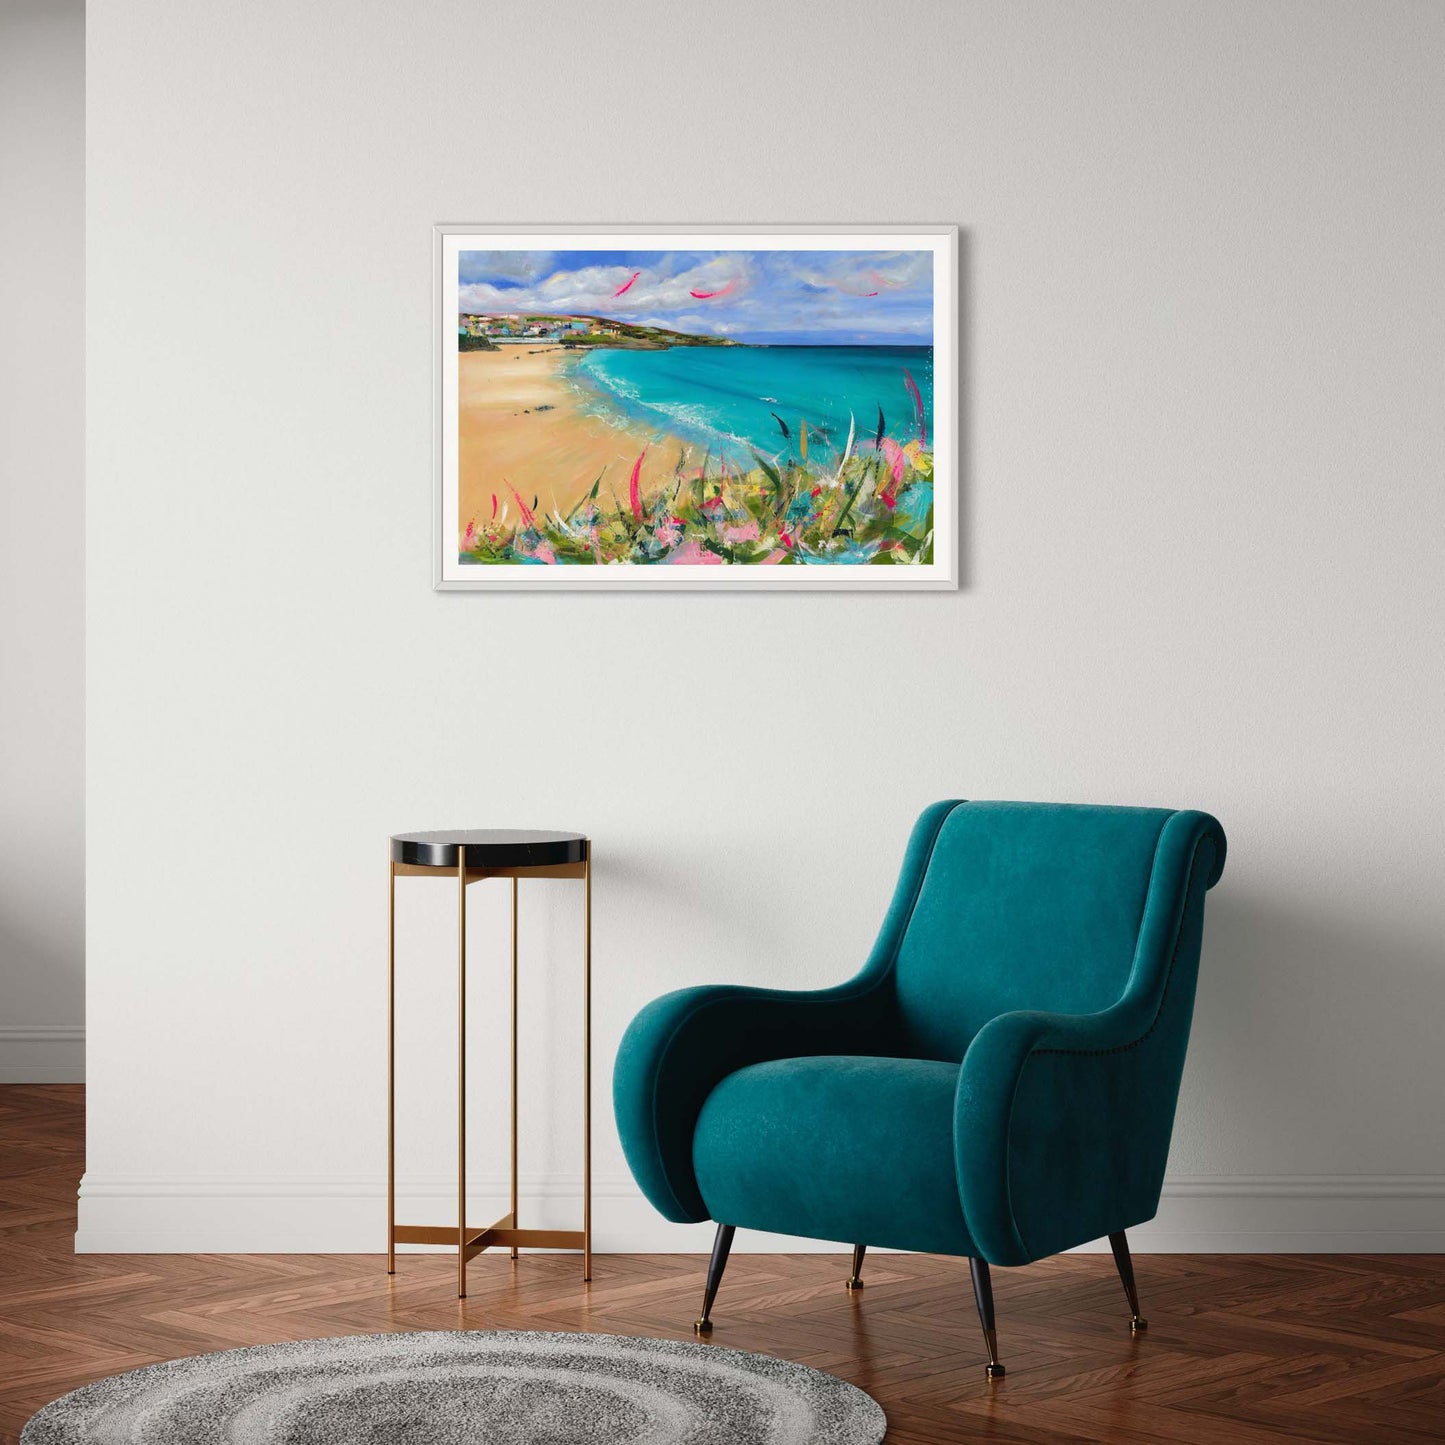 Leana Robinson Art - A Place in my heart - fine art print of Porthmeor beach in St Ives, Cornwall